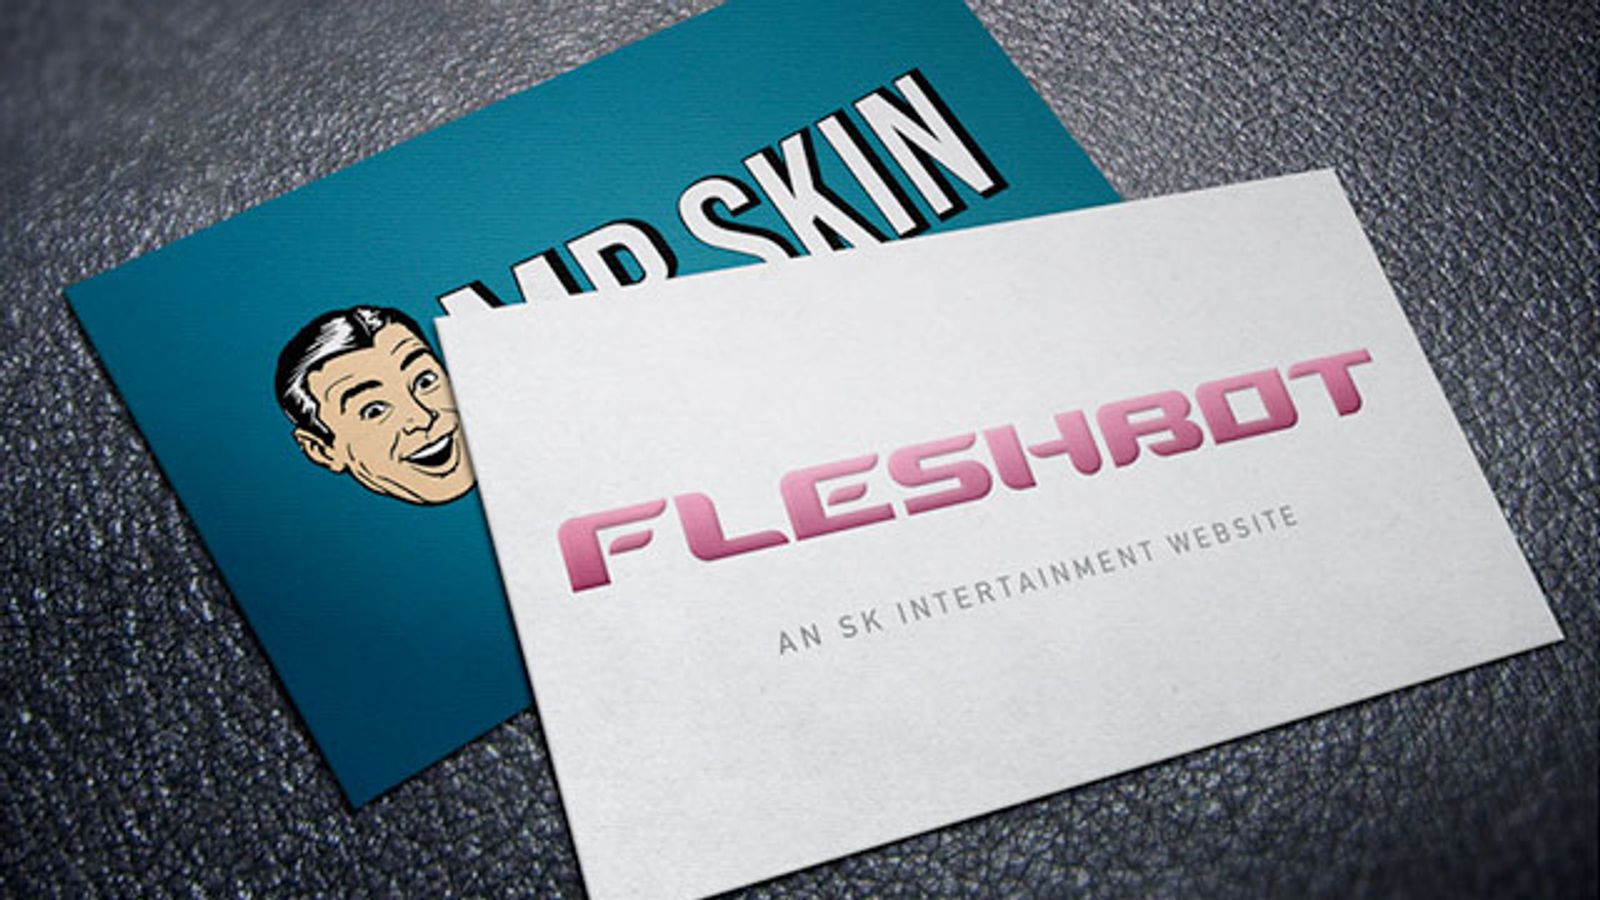 Mr. Skin Parent SK Intertainment Inc. Acquires Fleshbot